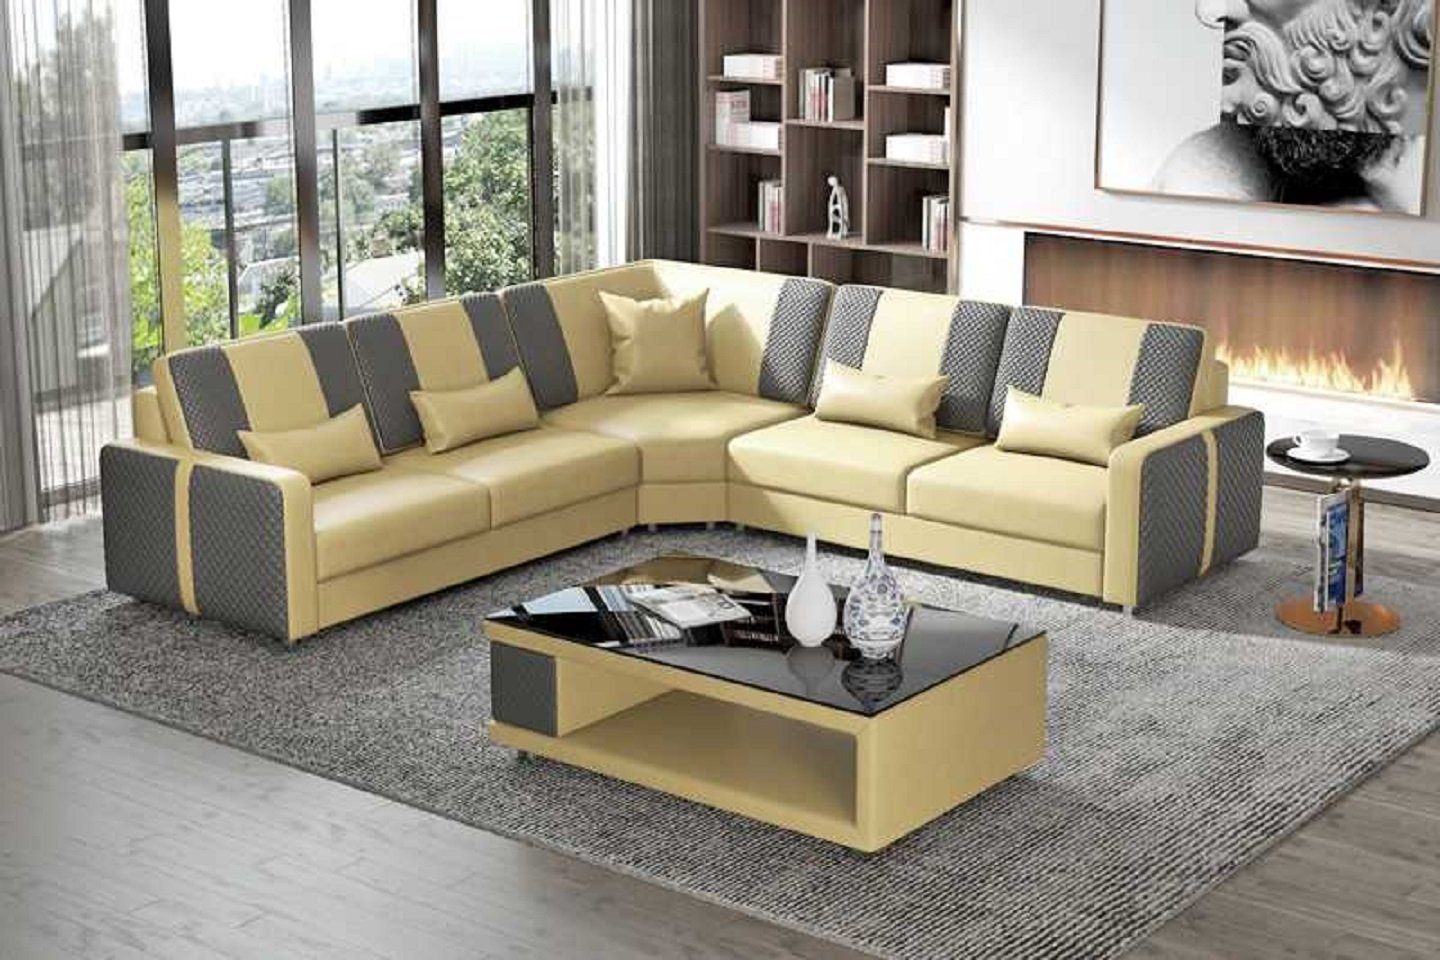 JVmoebel Ecksofa Design Eckgarnitur Ecksofa L Form Couch Sofa Modern Eckcouch, 3 Teile, Made in Europe Beige